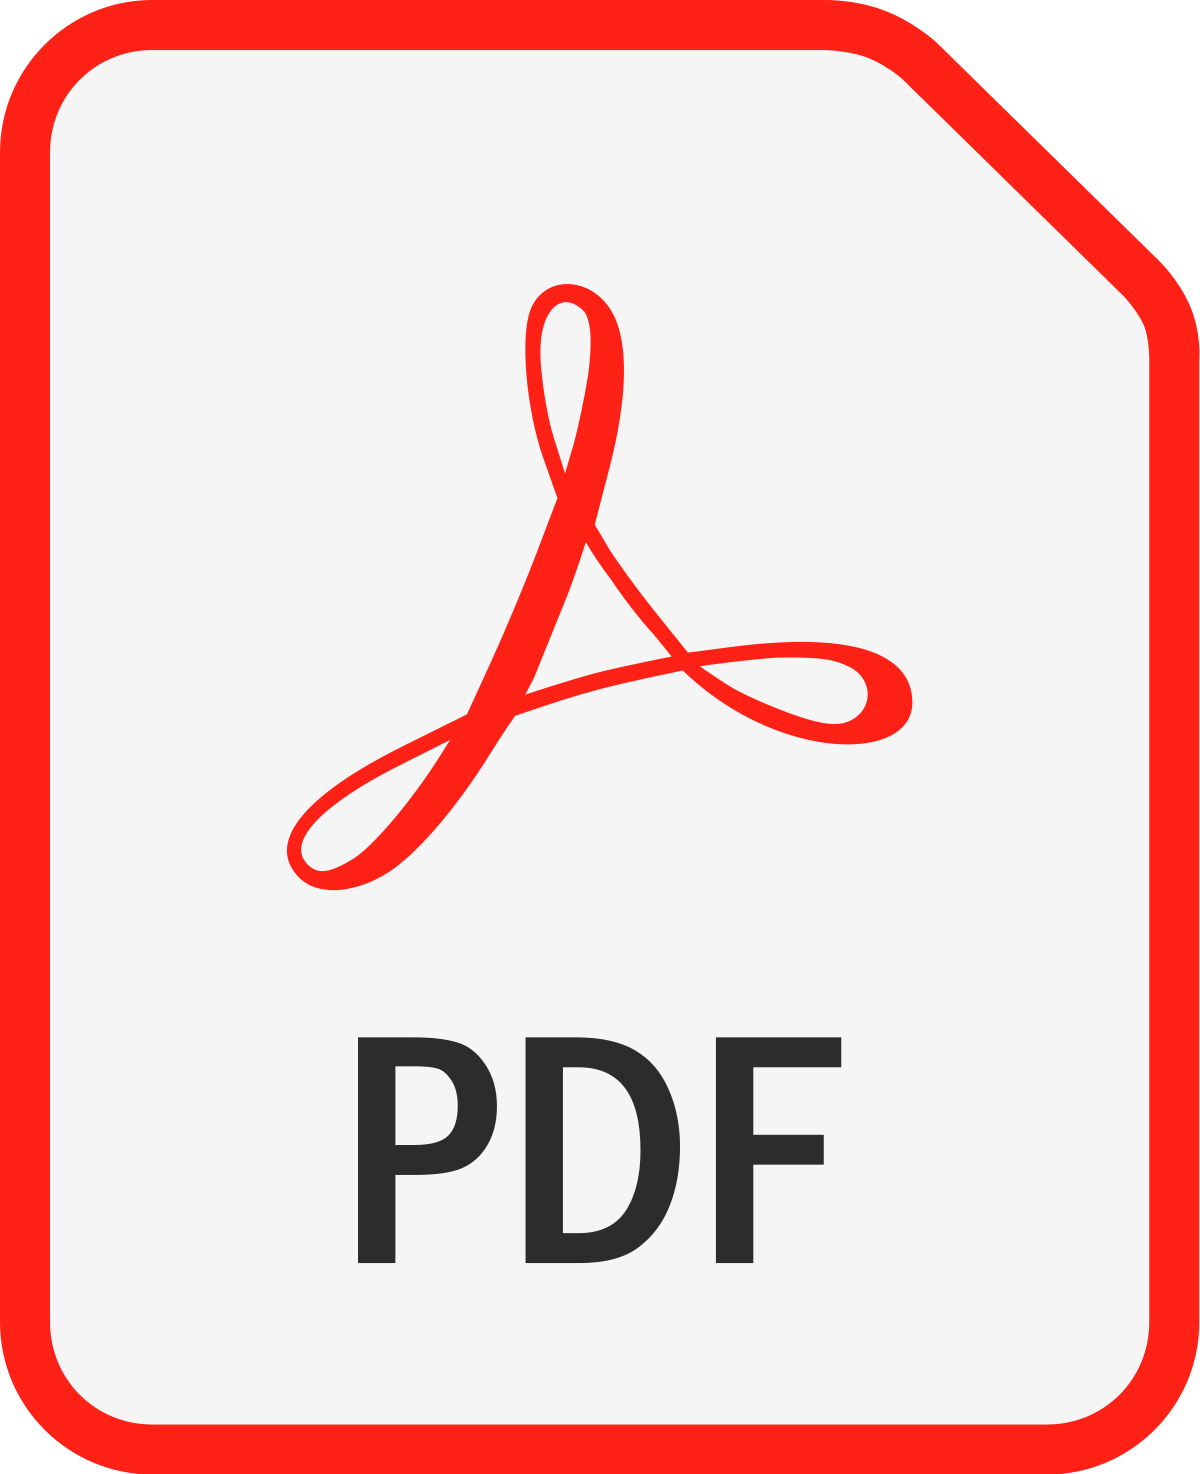 PNG file format characteristics and advantages